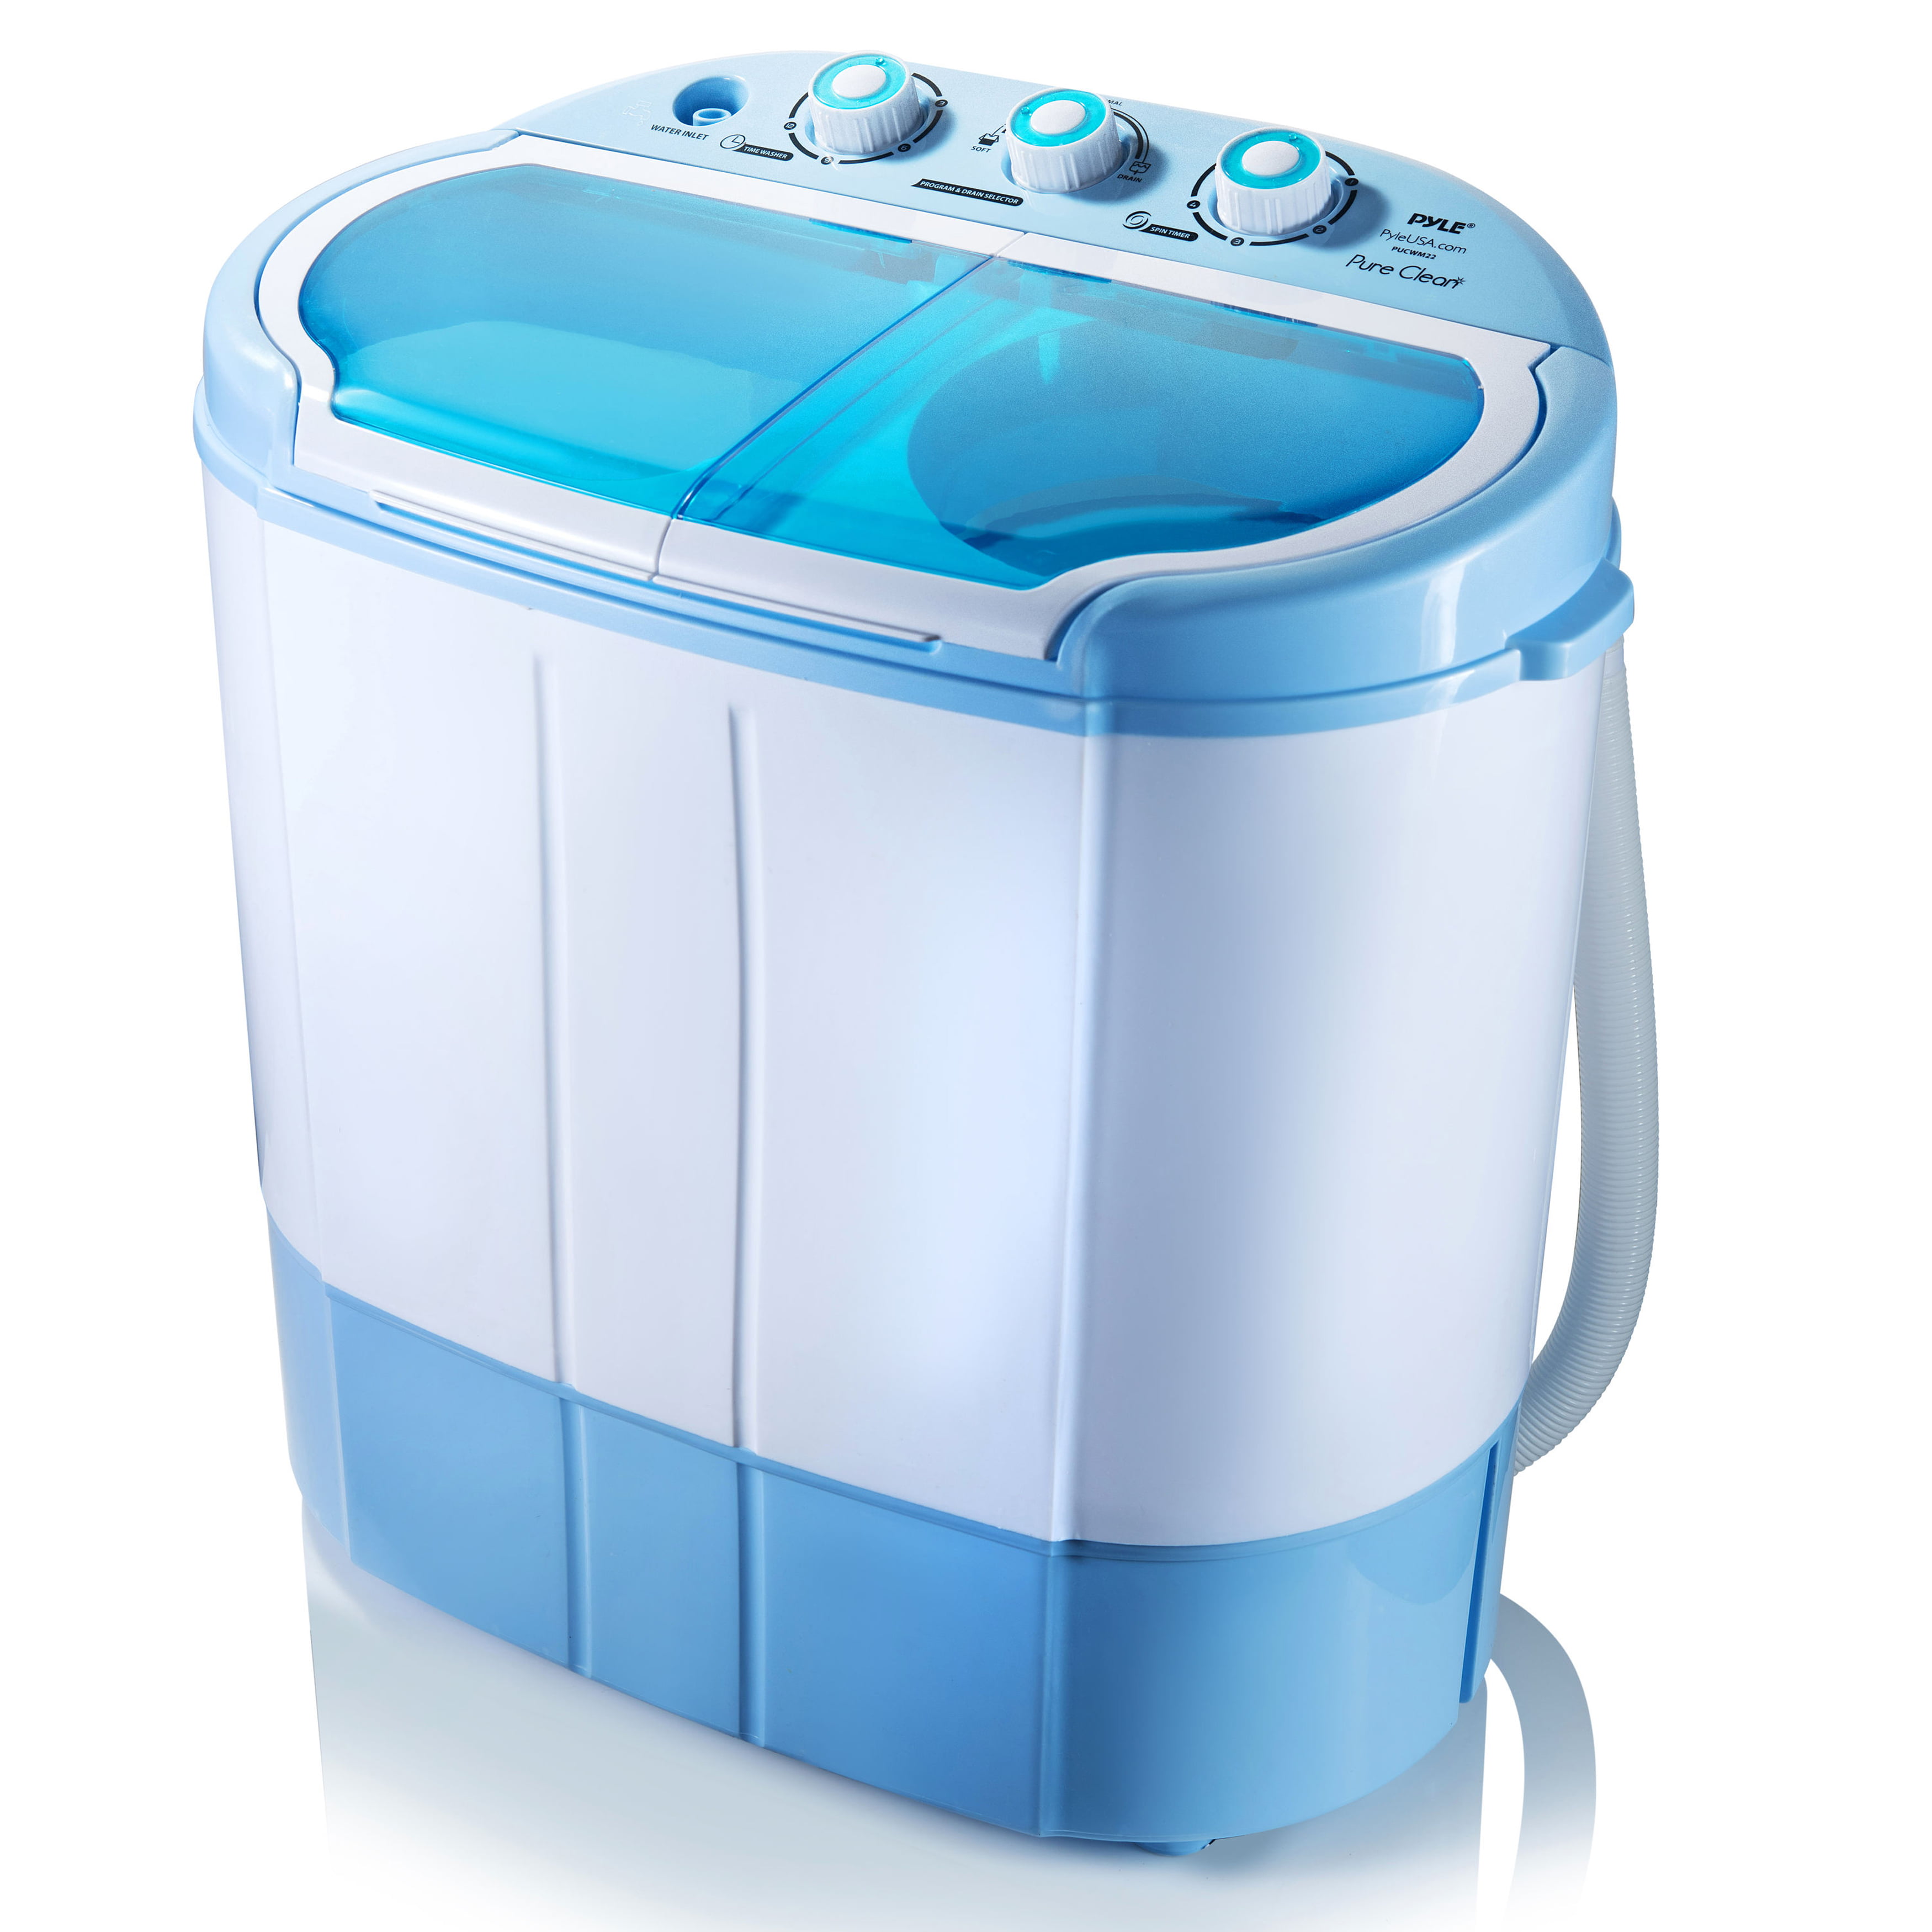 Electronic Mini Washing Machine Baby Toy Washing Machine Set Simulated Home  1W3 